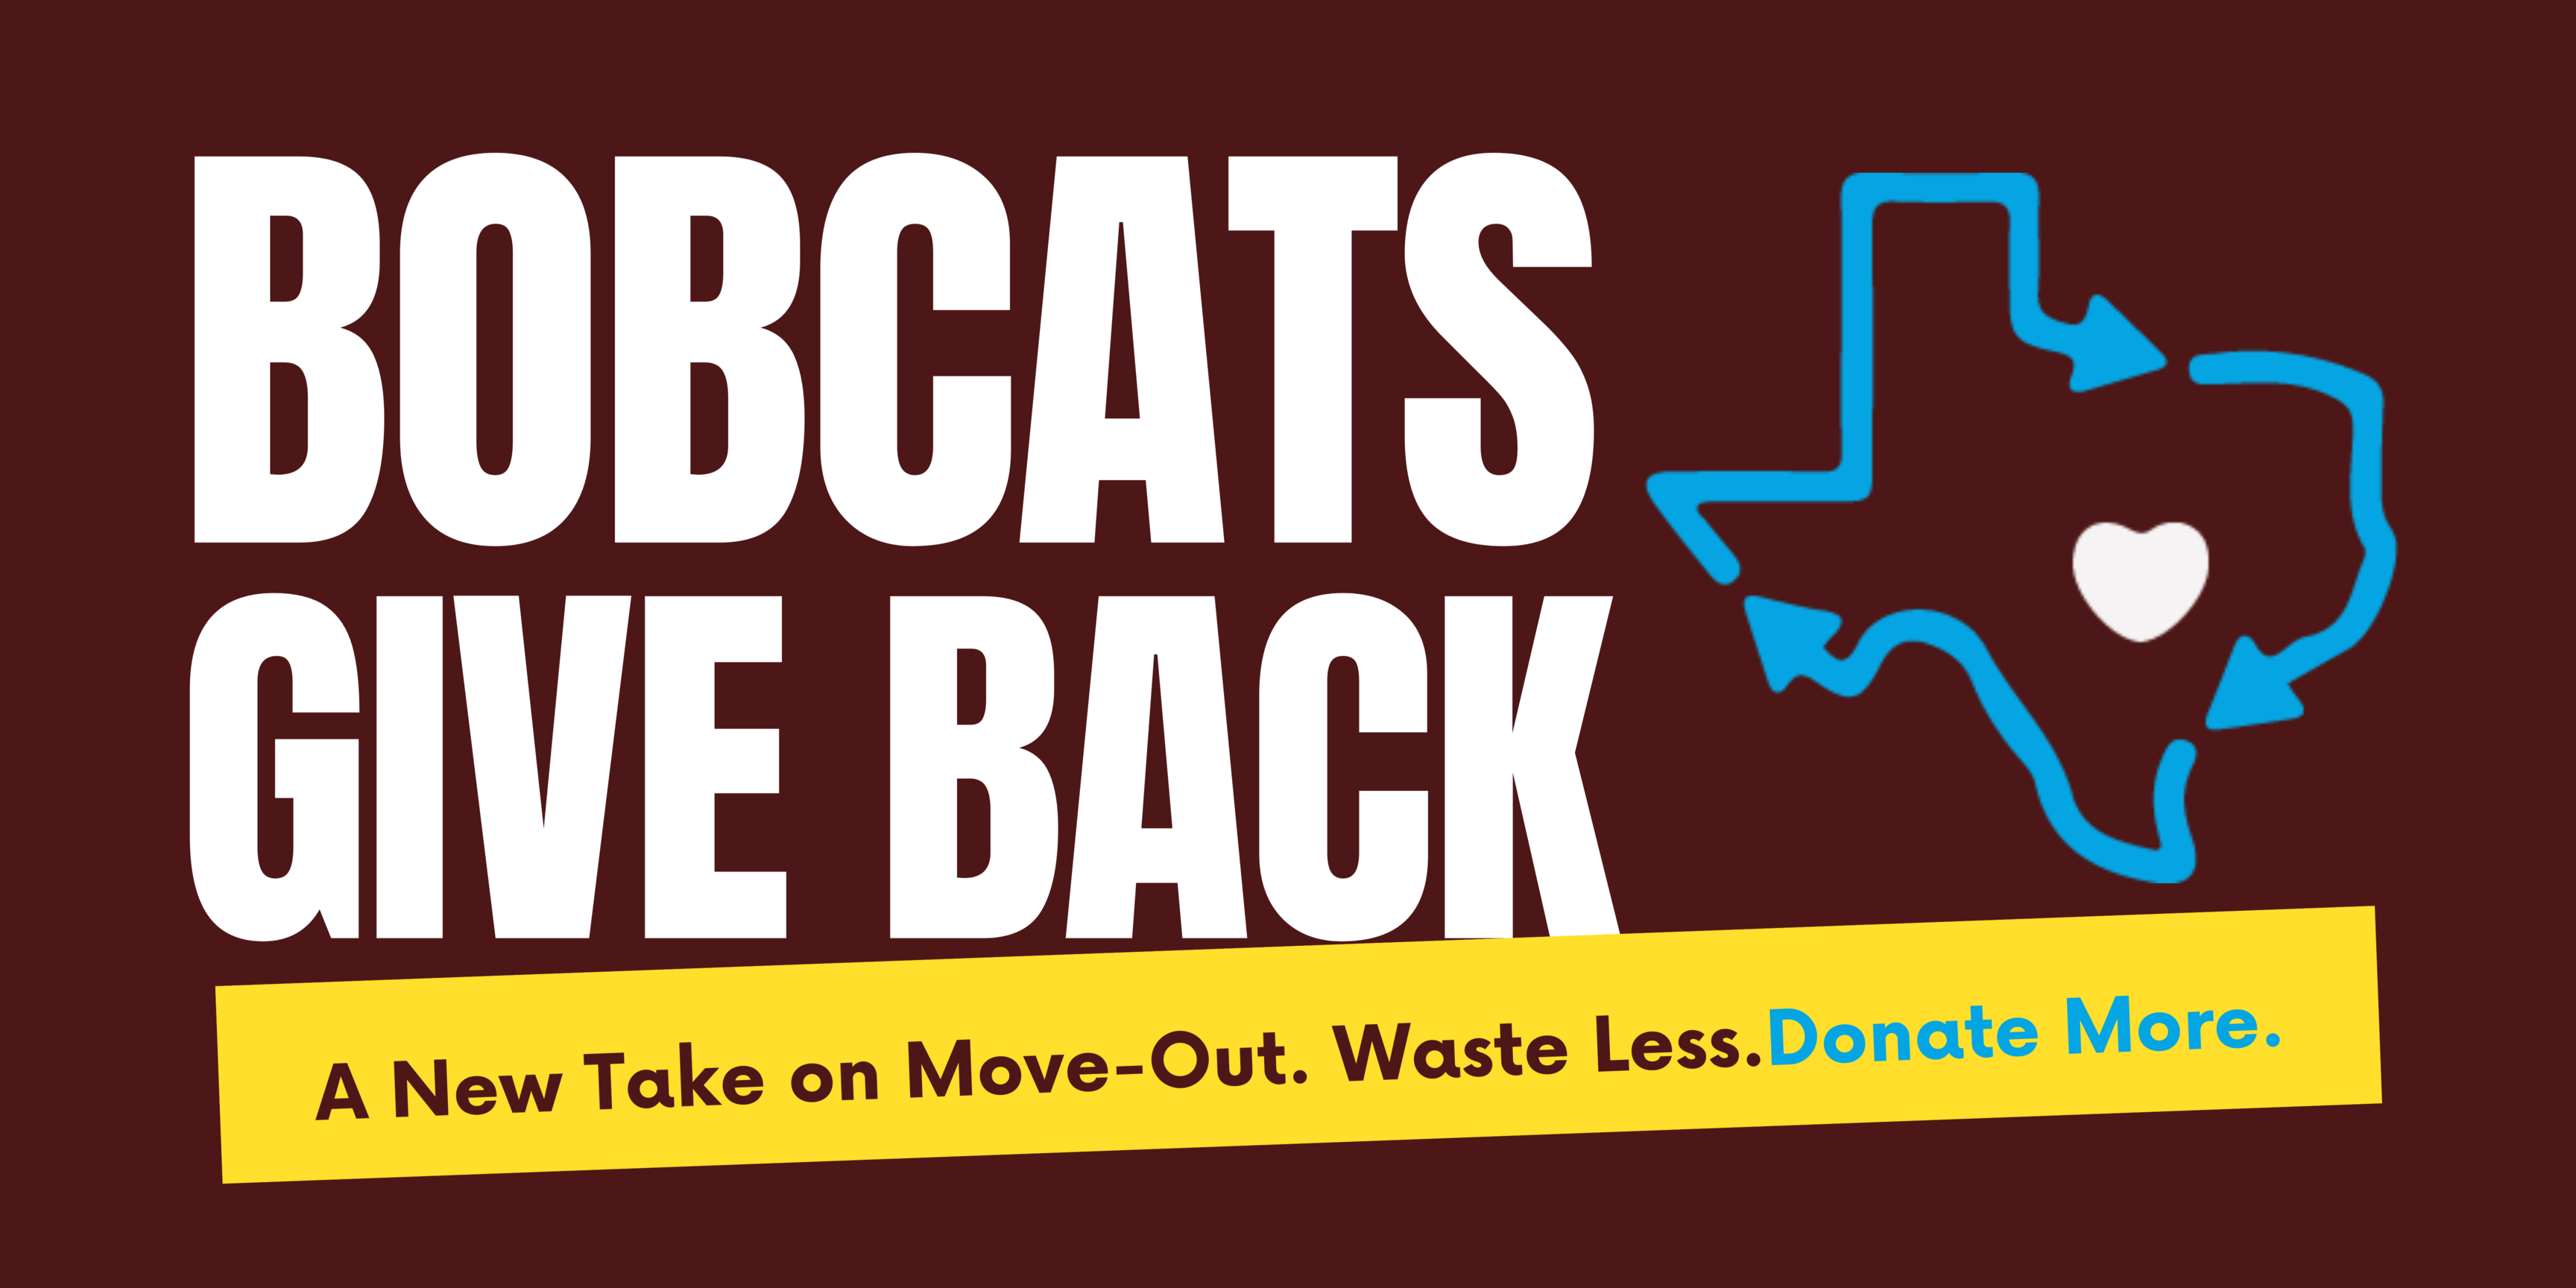 The Bobcats Give Back logo